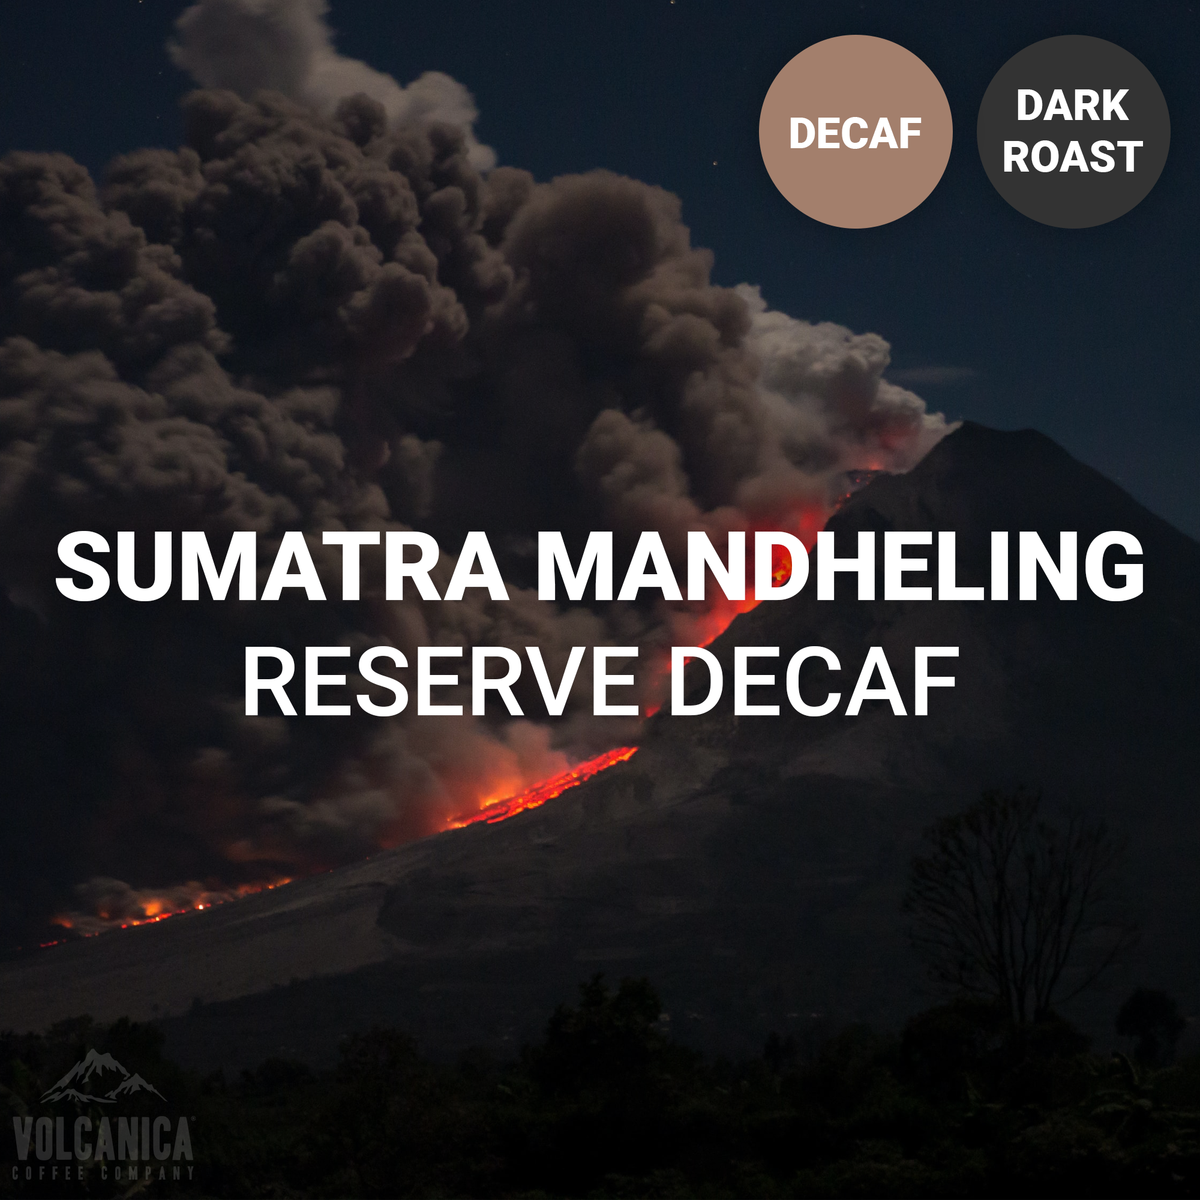 Sumatra Mandheling Dark Roast Decaf Coffee